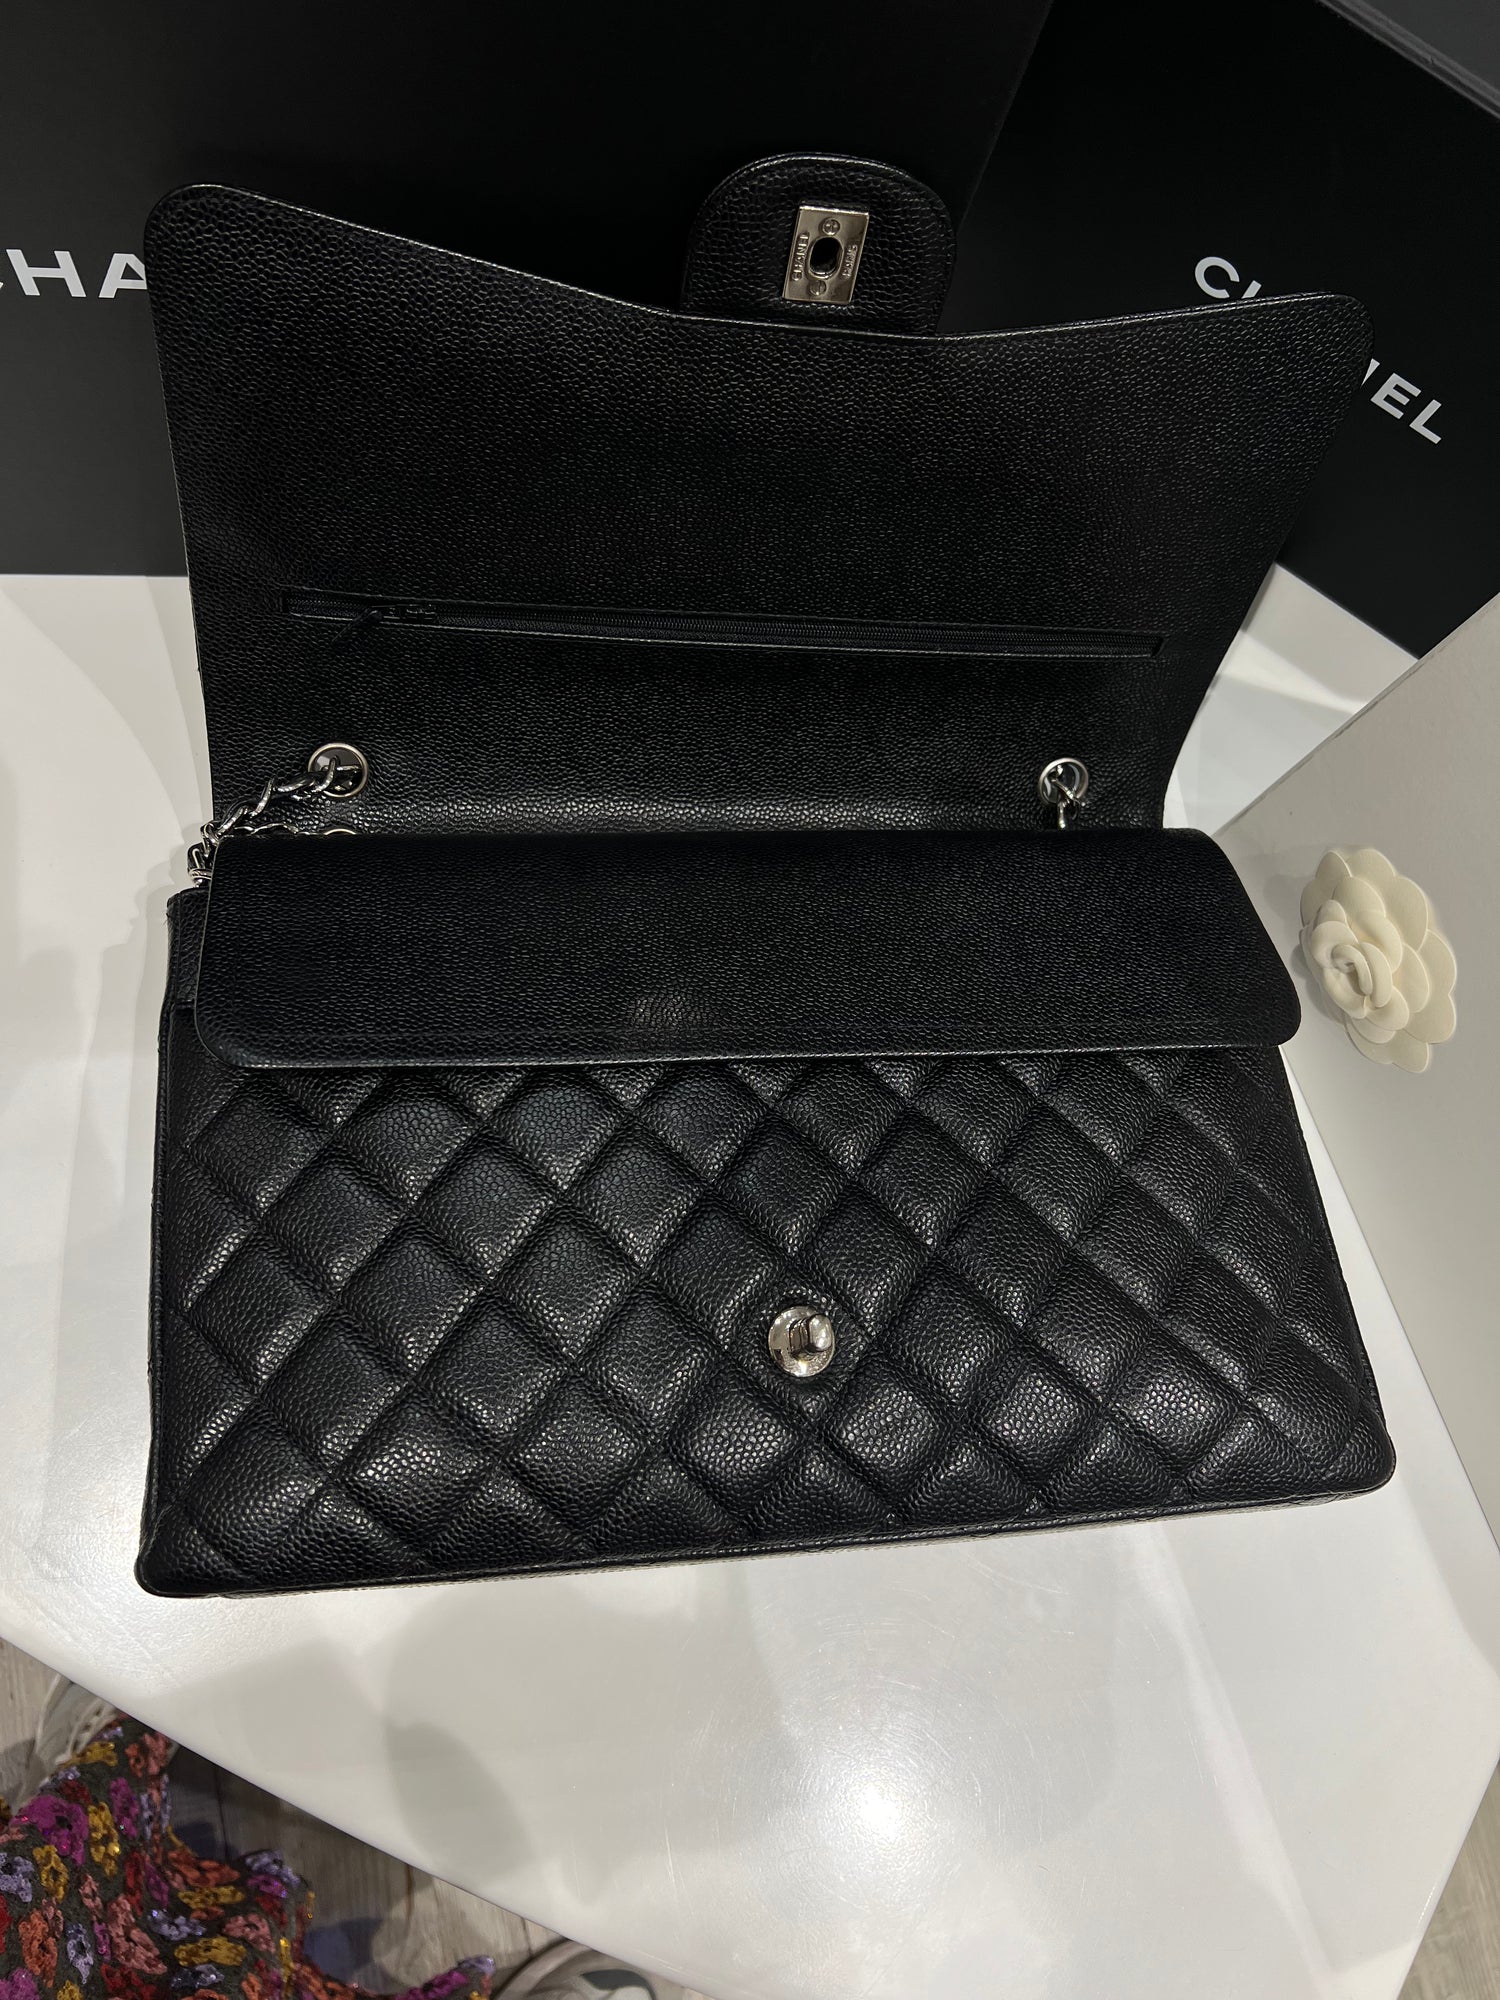 Chanel - classic maxi jumbo black caviar leather bag